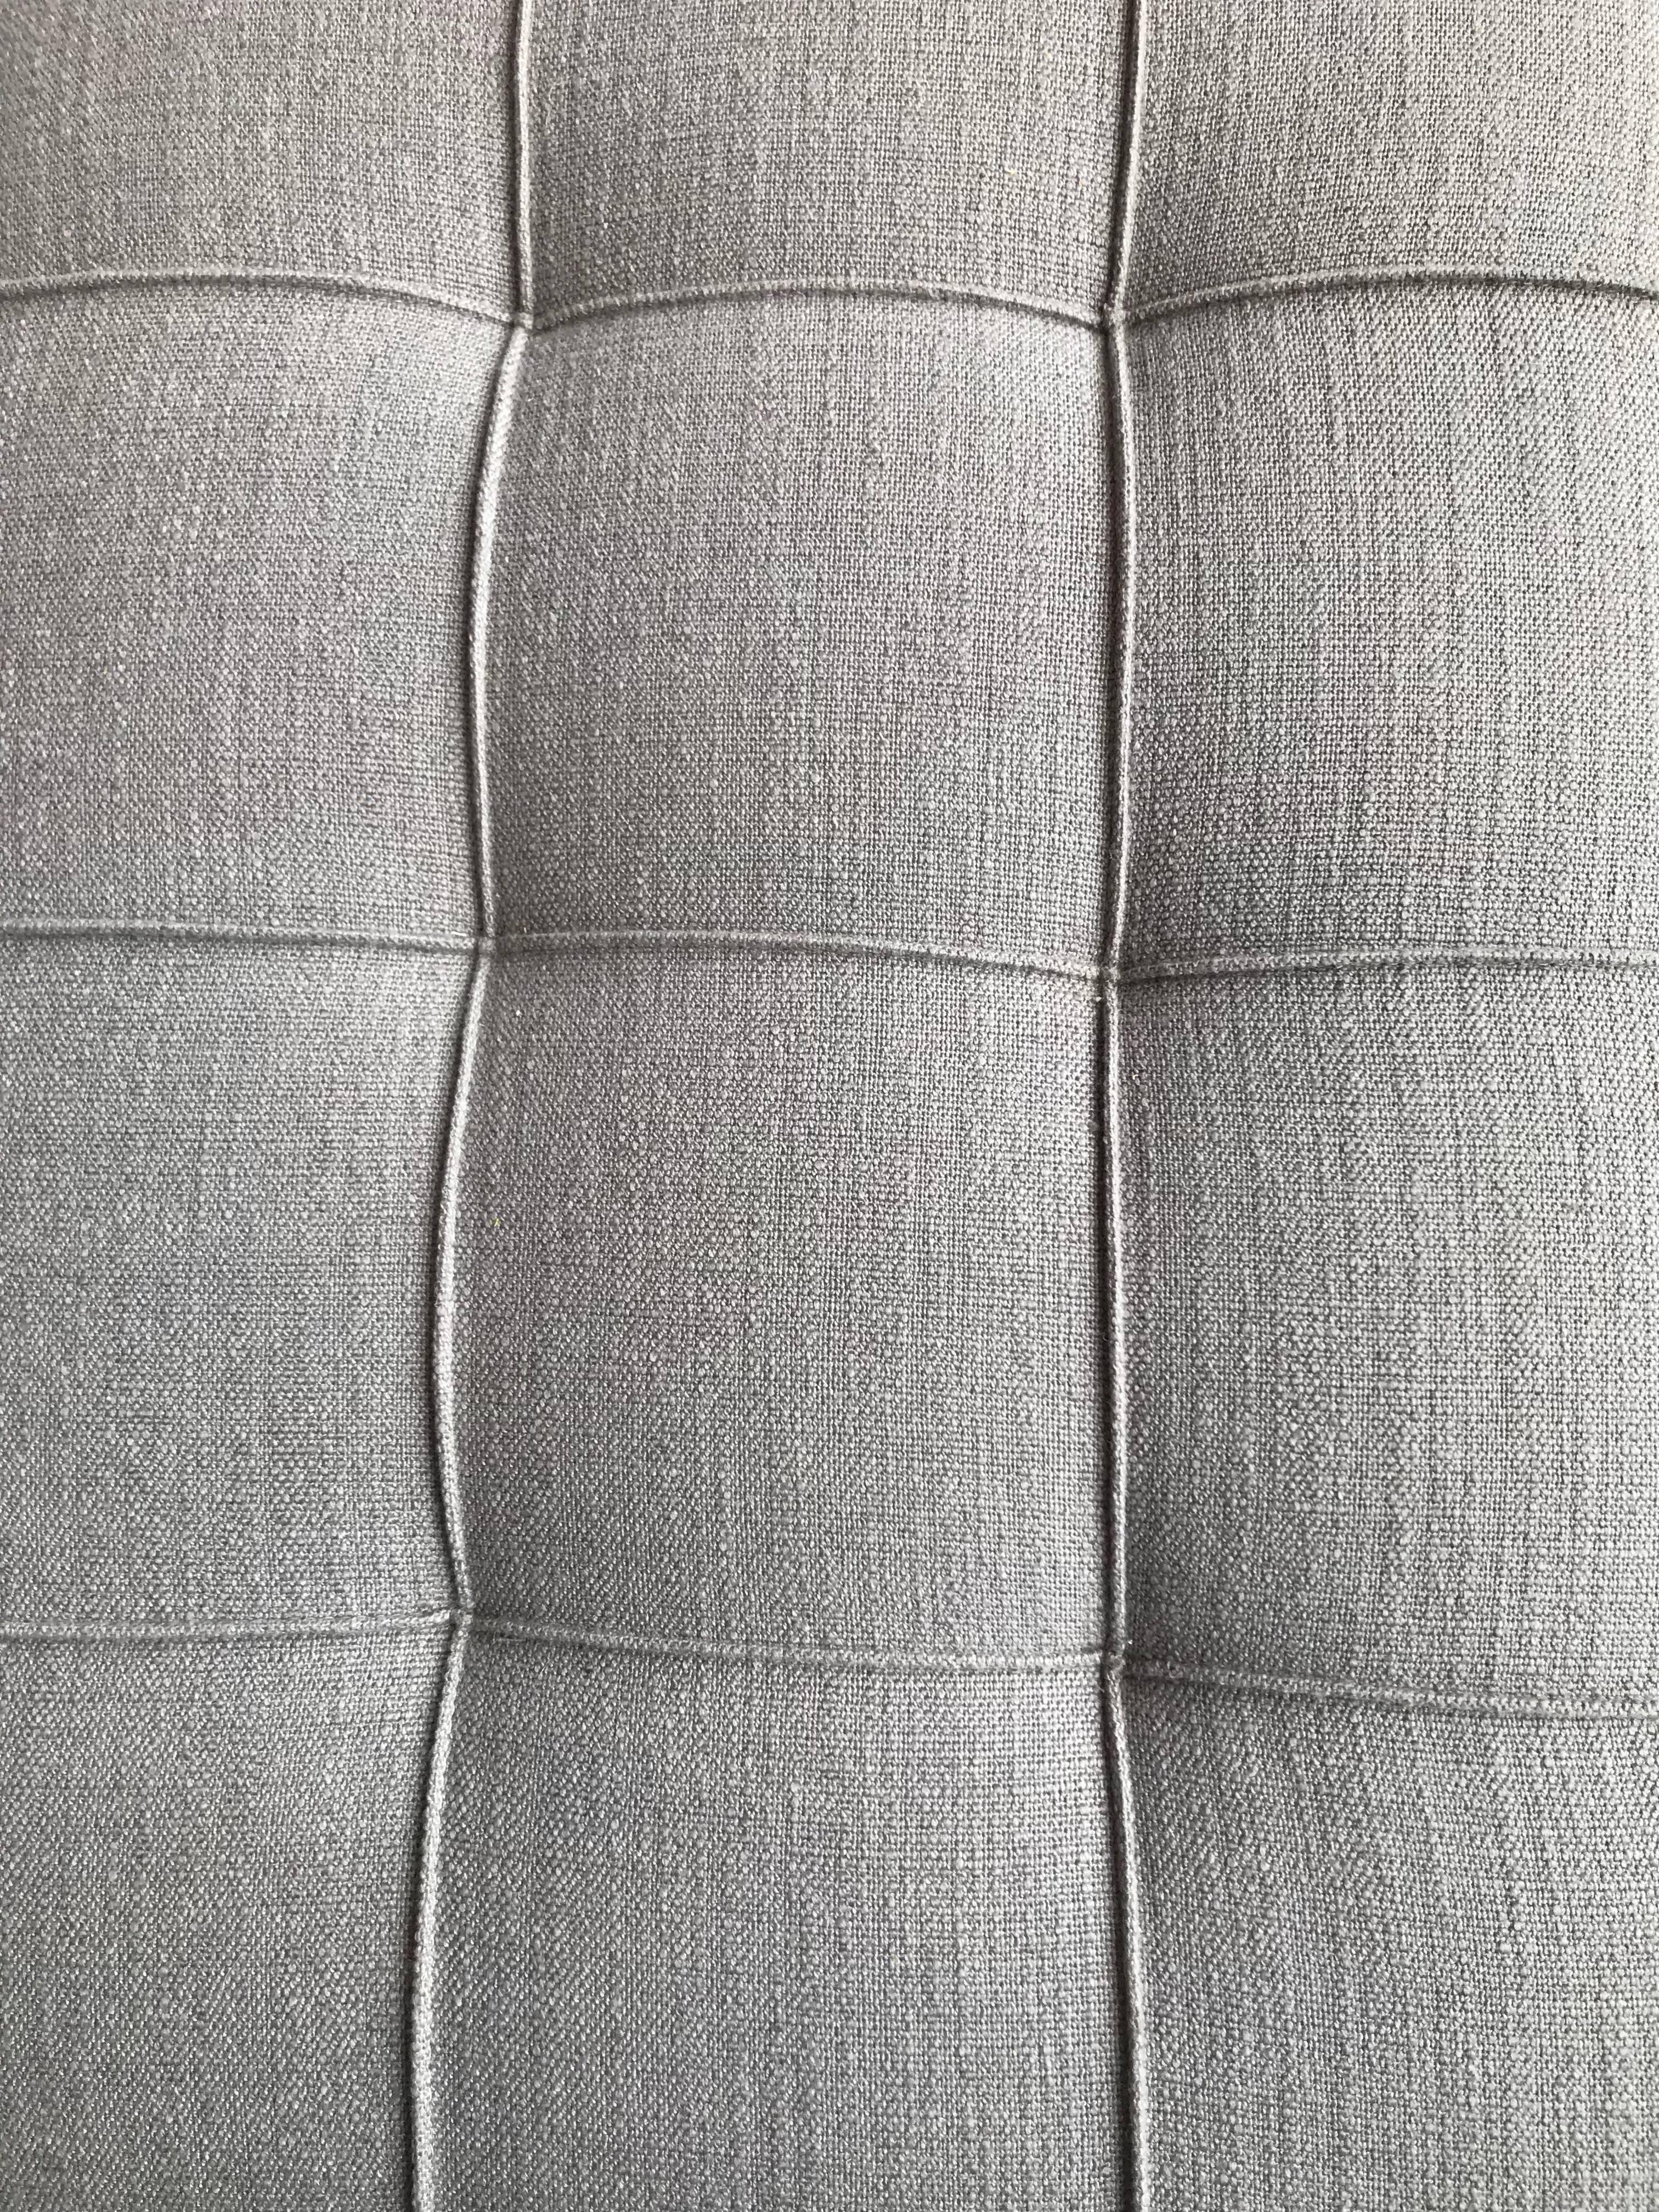 Florence Knoll Upholstered Three-Seat Armless Sofa 2